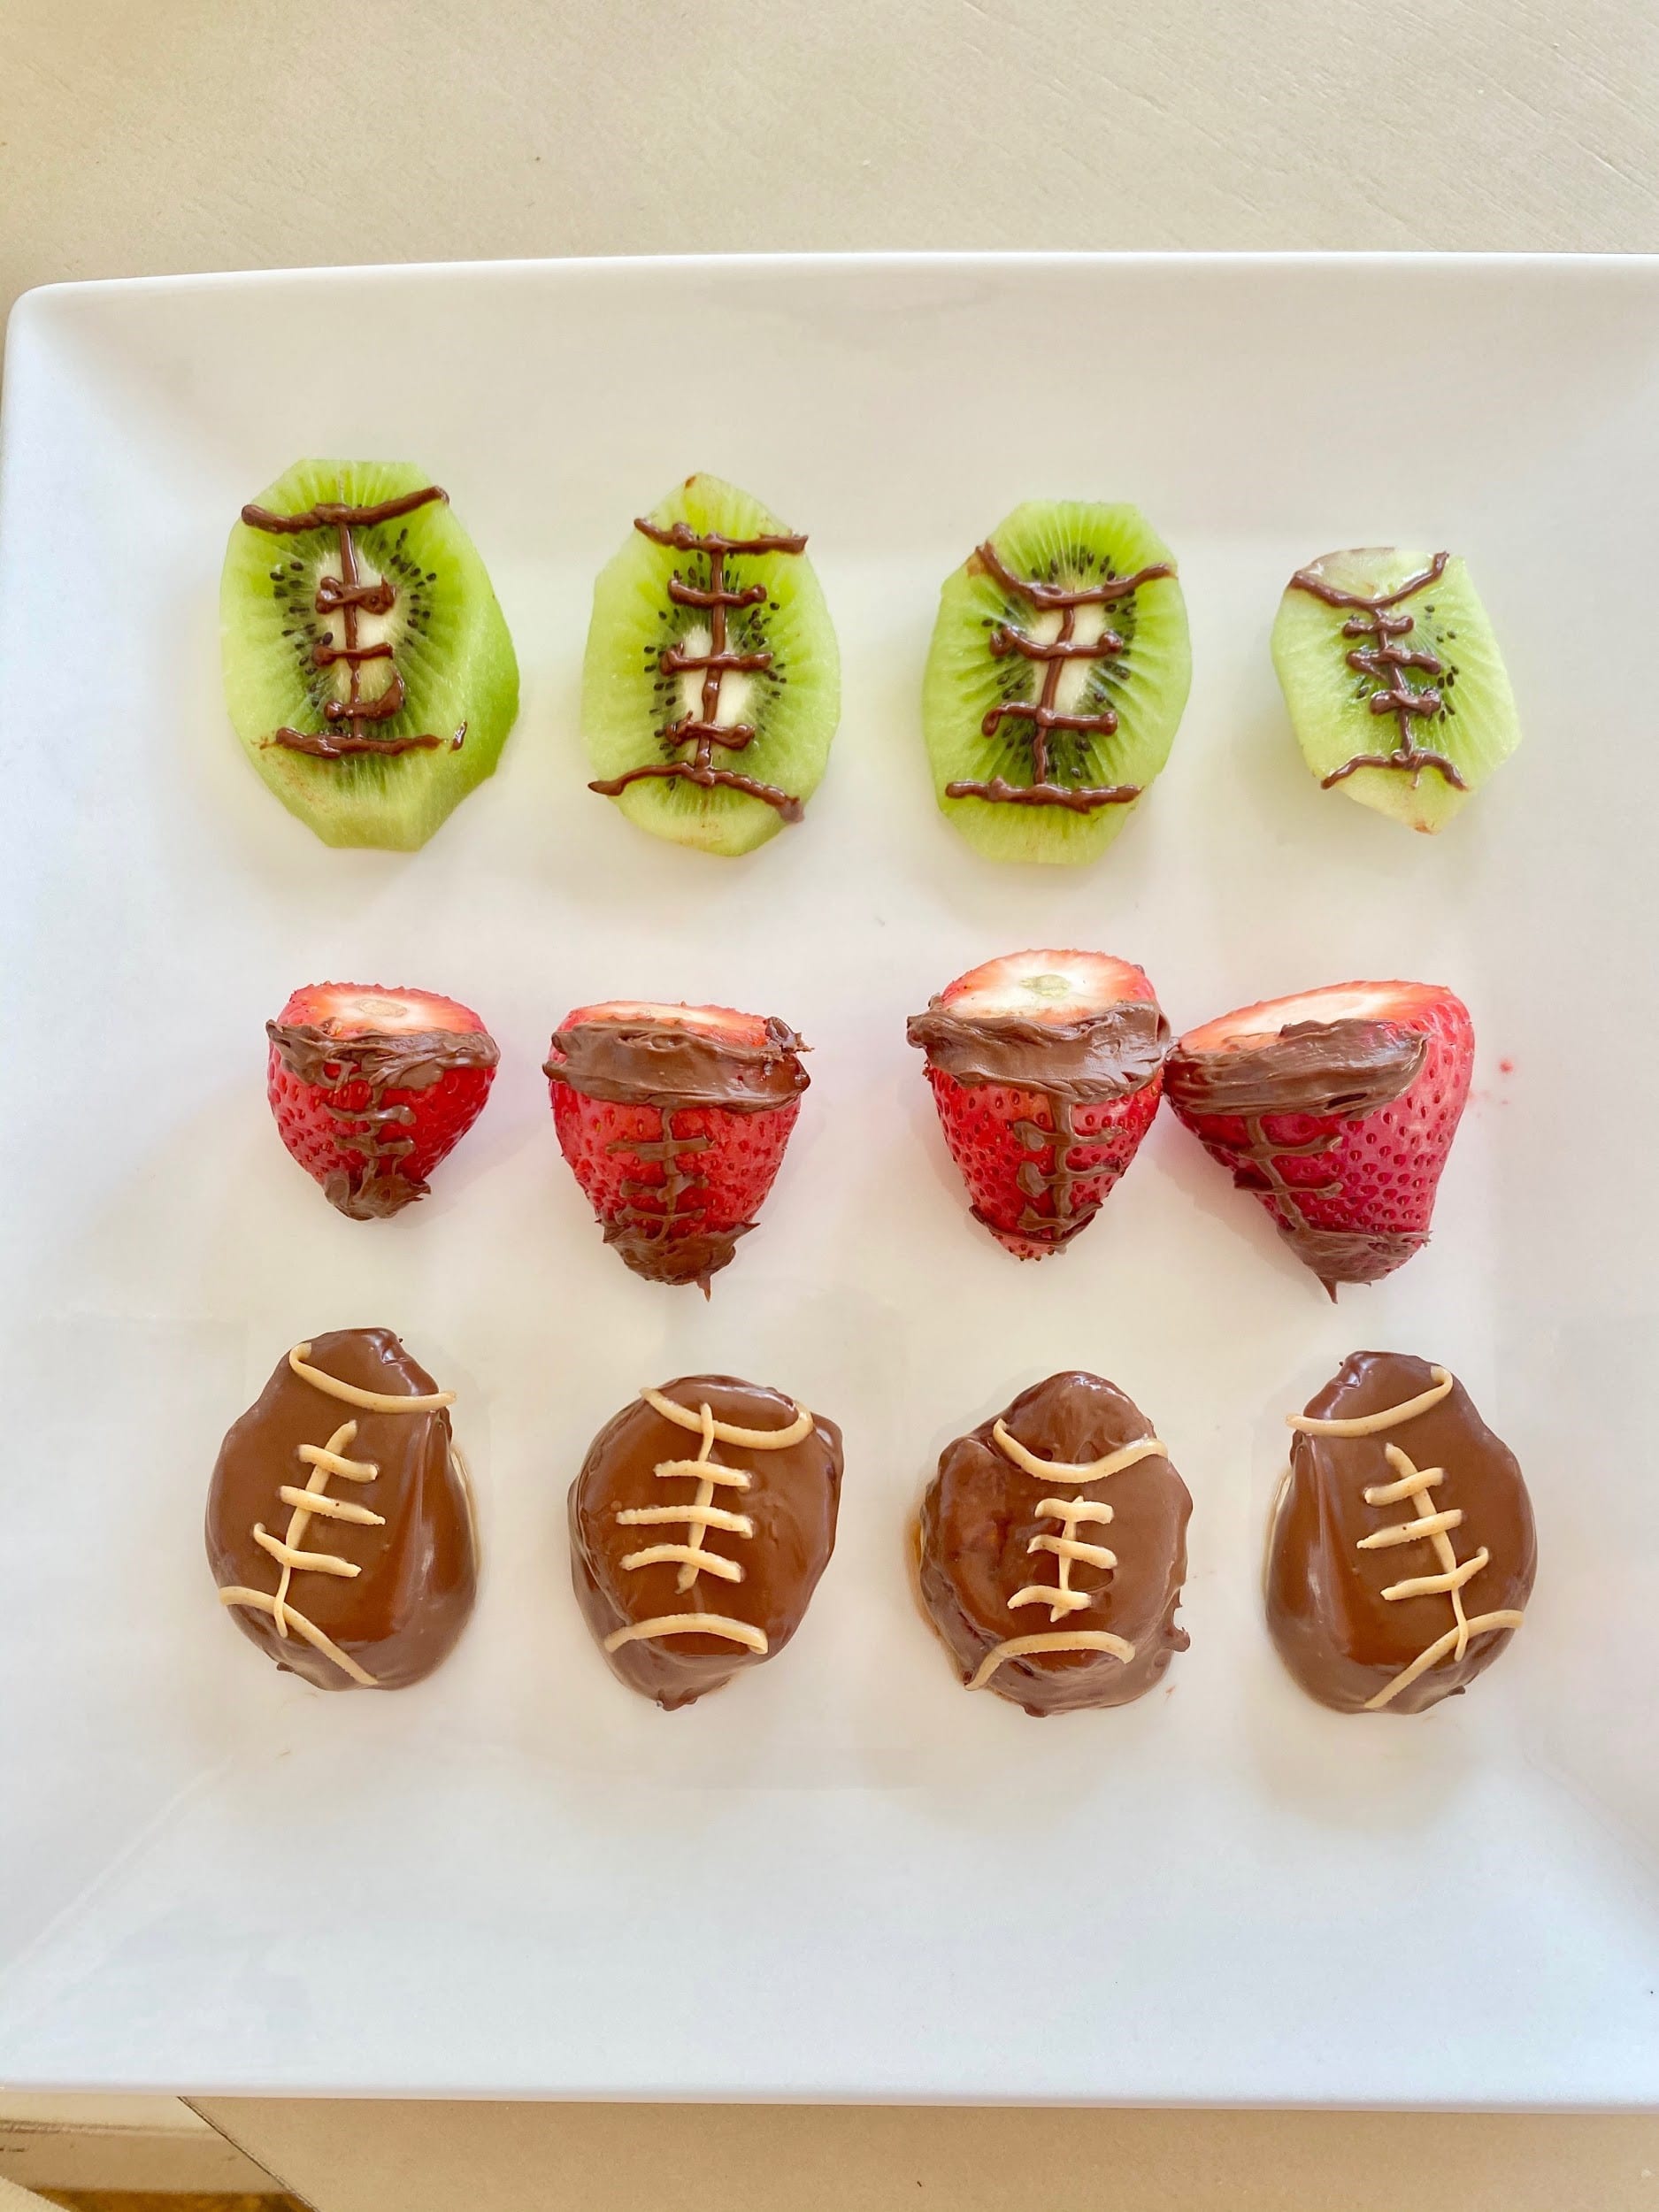 Fruit shaped into footballs